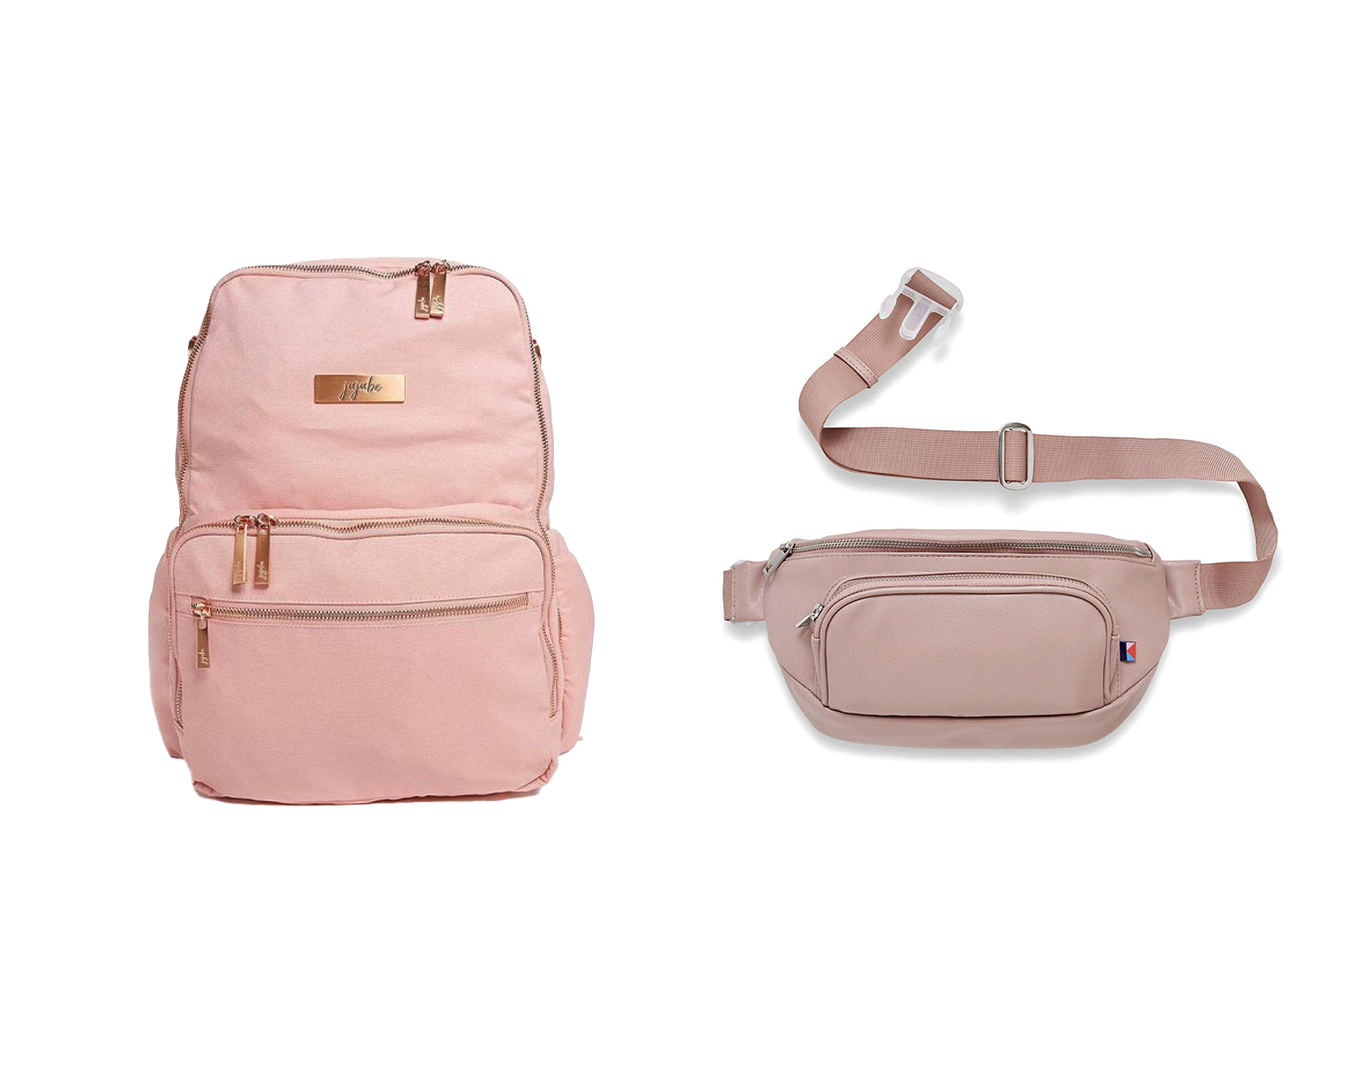 Kibou fanny pack diaper bag in blush and the JuJuBe Zealous Backpack Diaper Bag